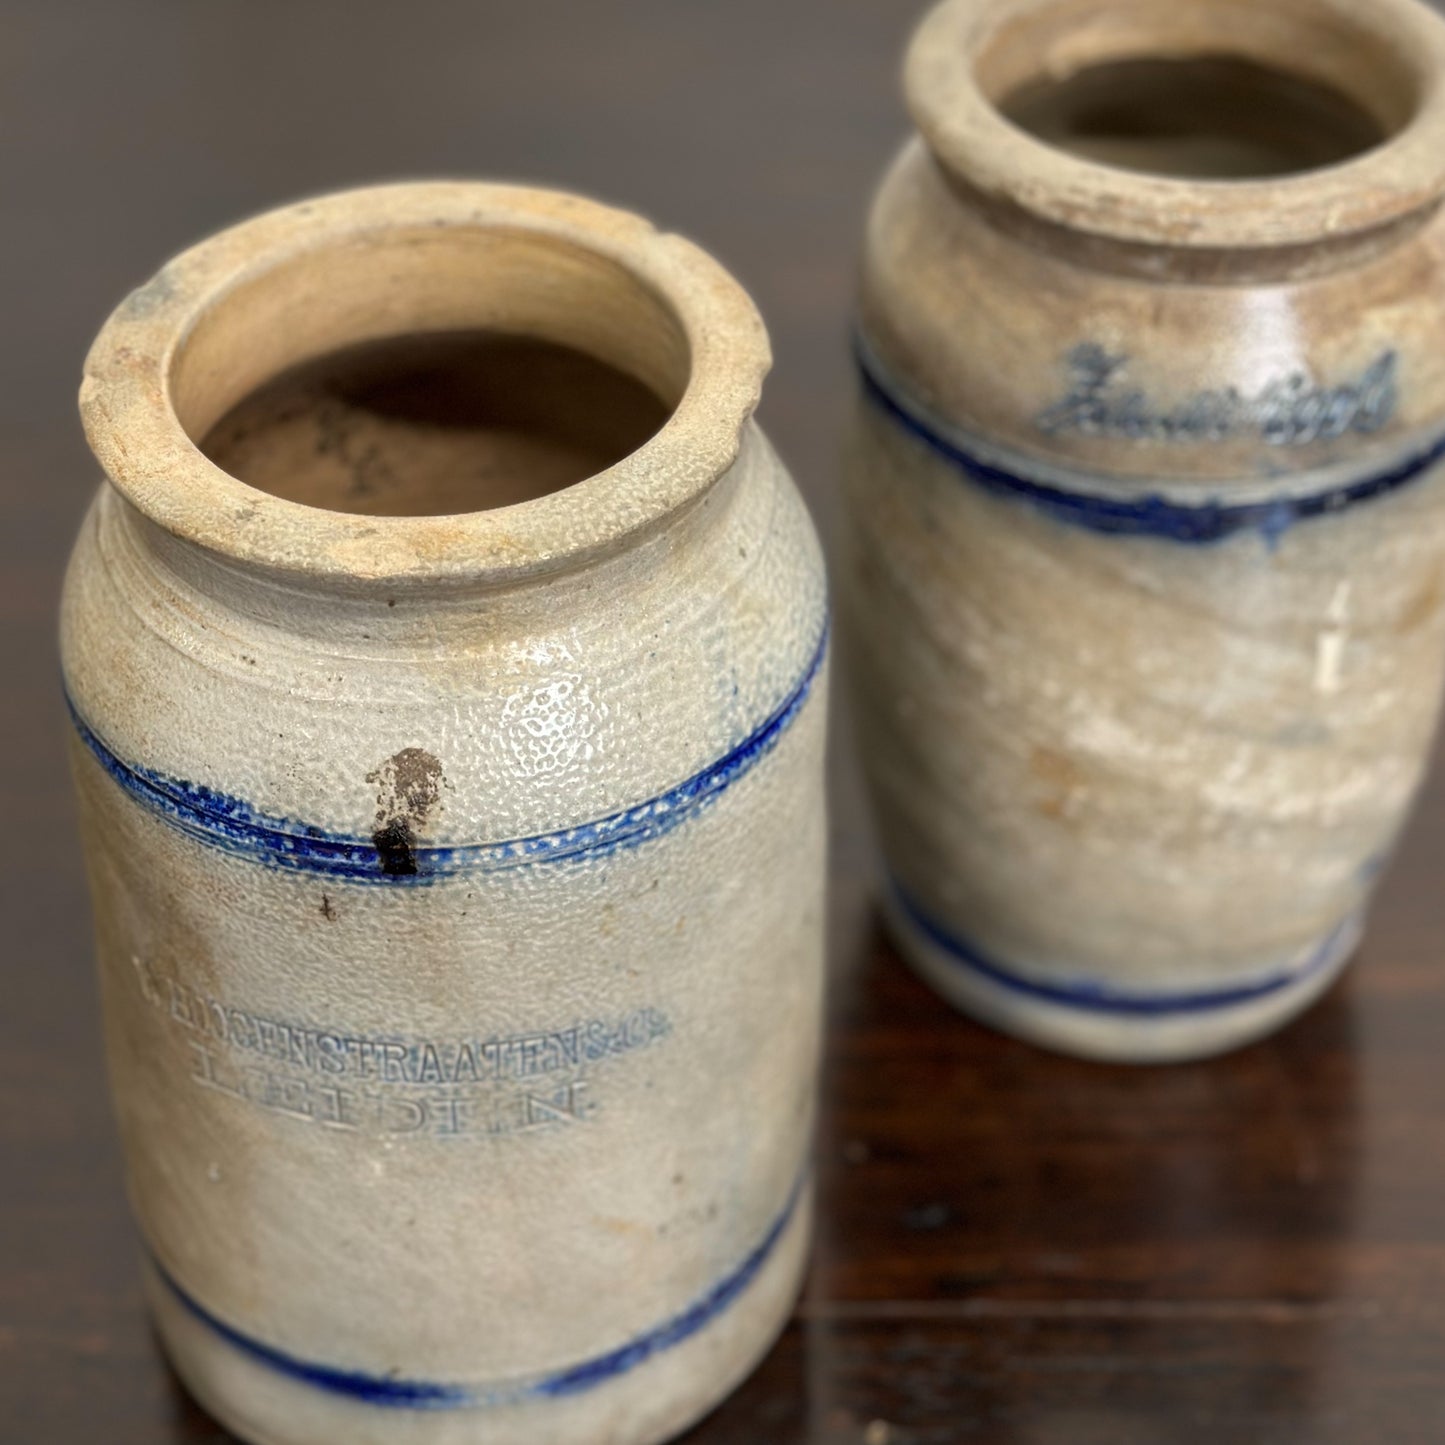 Vintage Terracotta Storage Jar